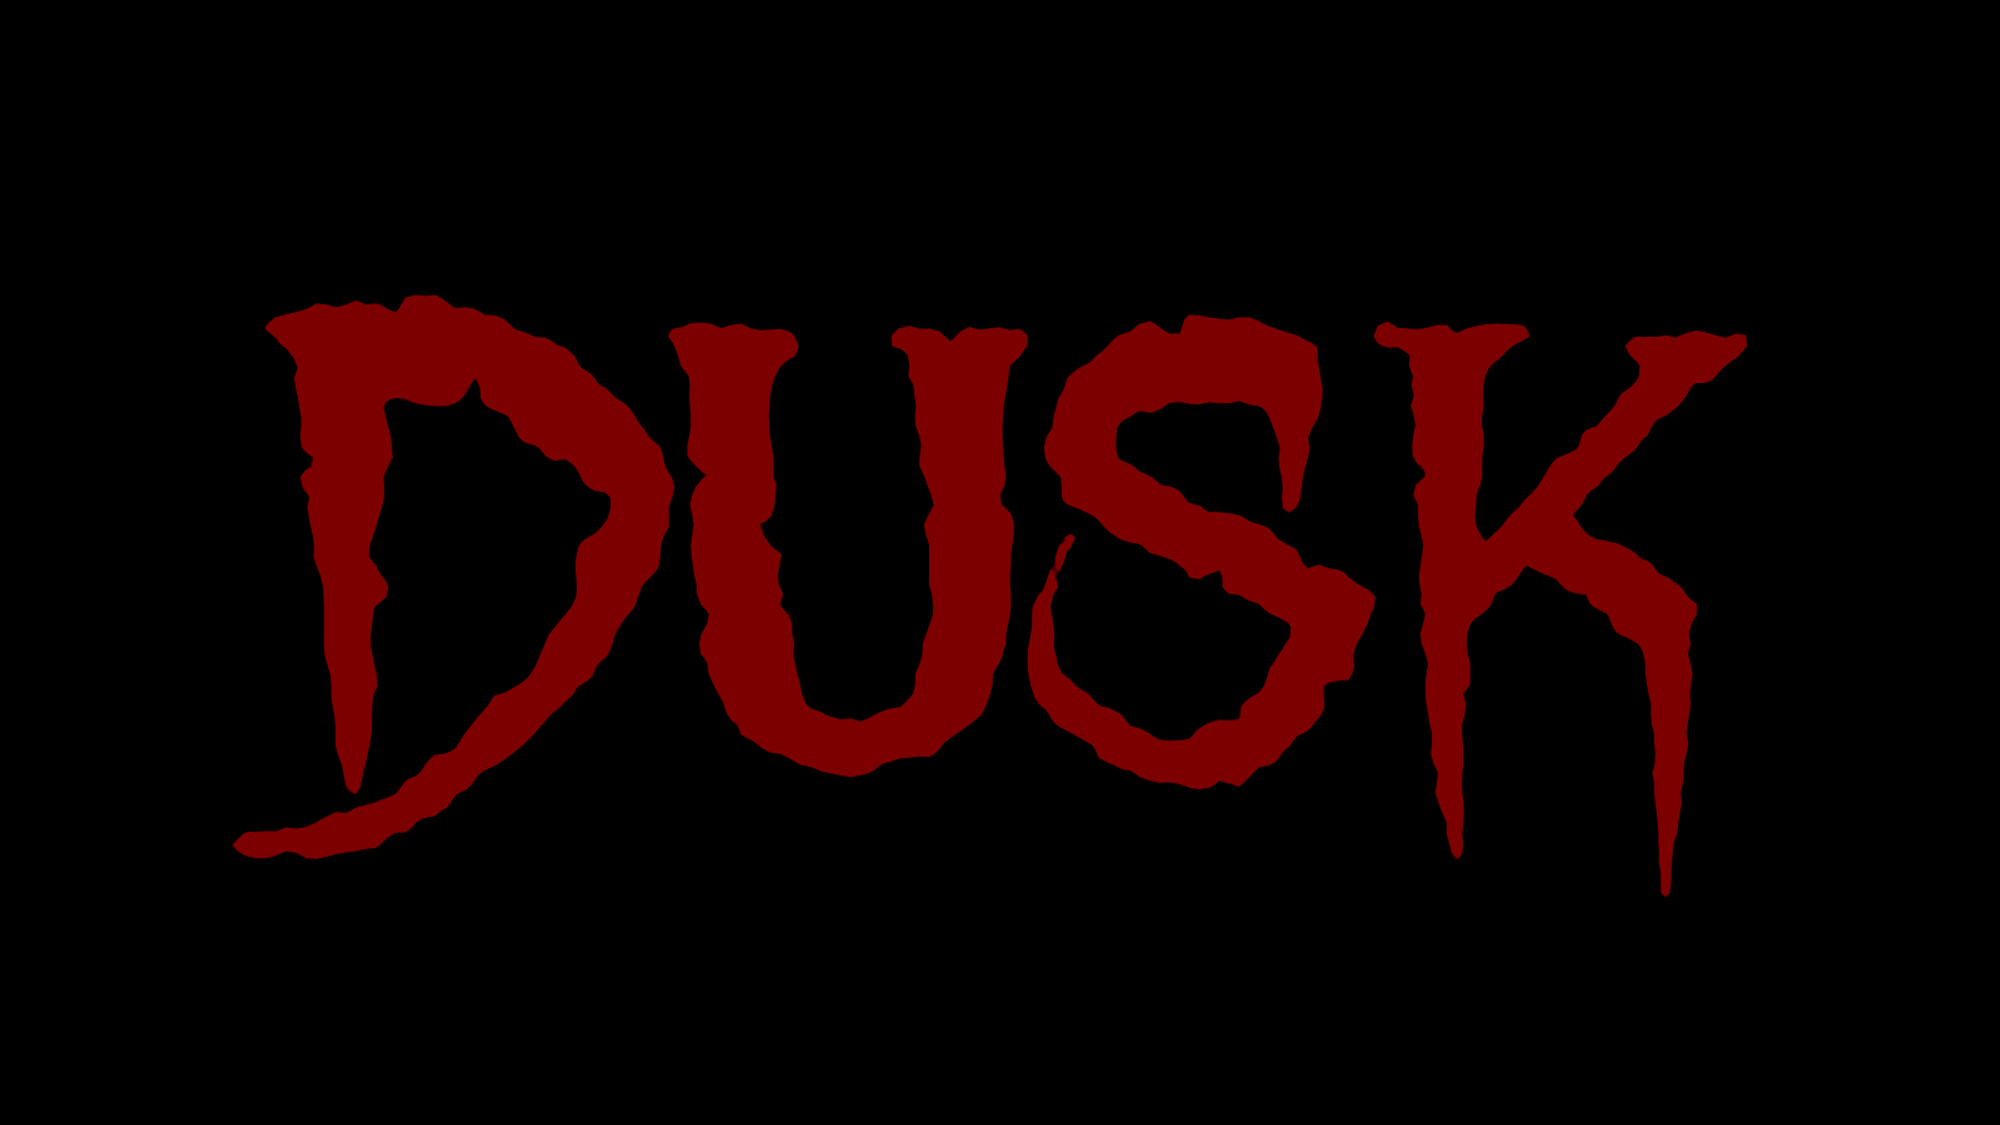 DuskGame Red Typography Black Background 2000x1125